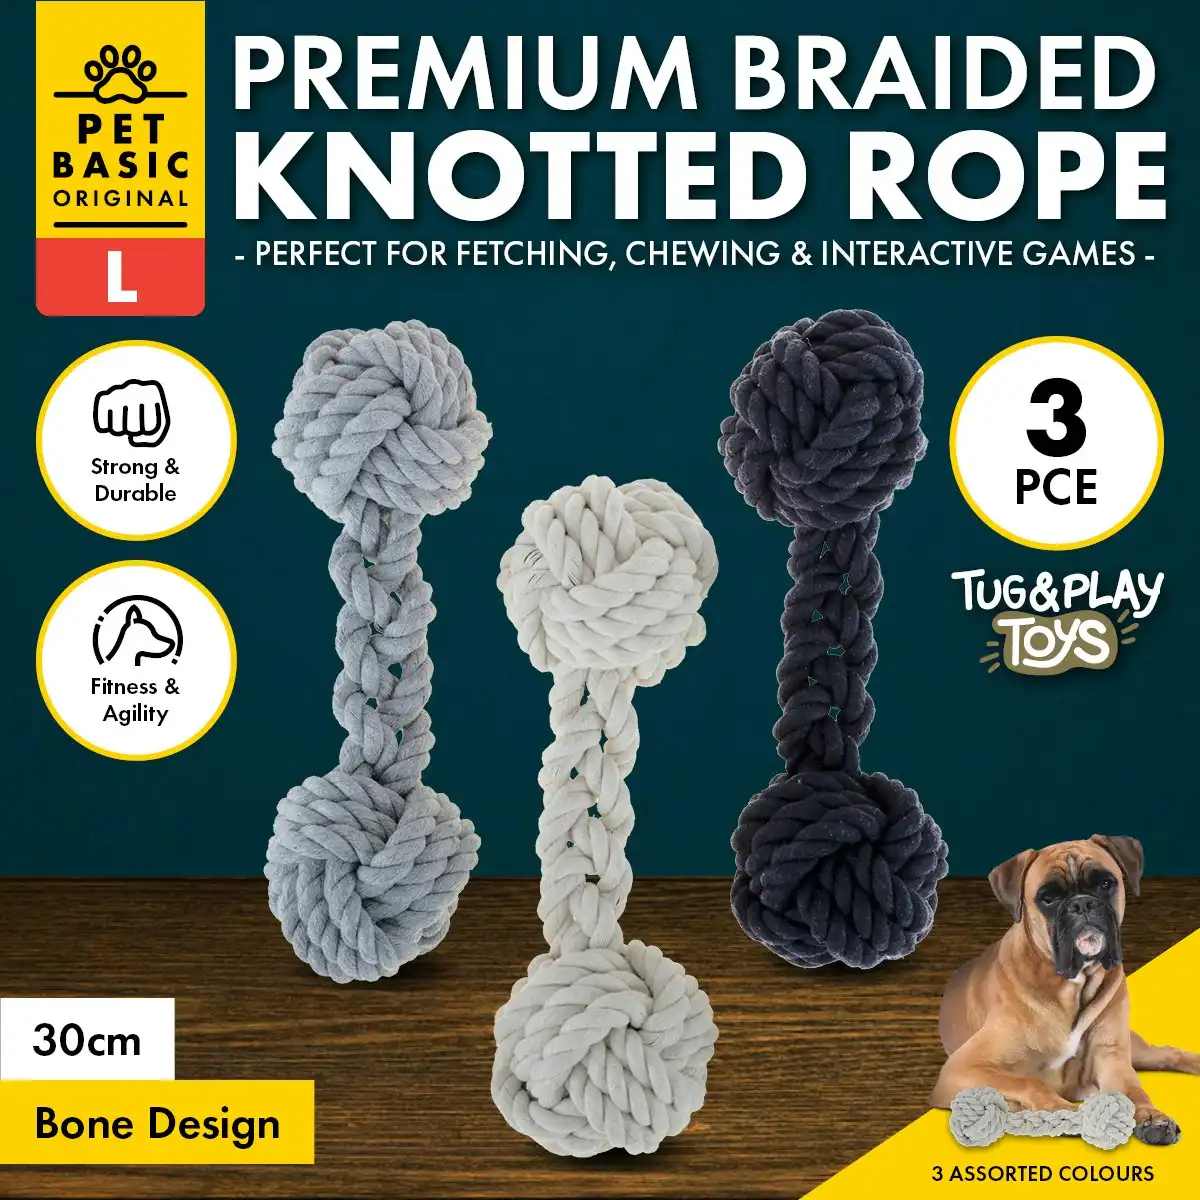 Pet Basic 3PCE Premium Braided Knot Bone Size Large Natural Fibres 30cm